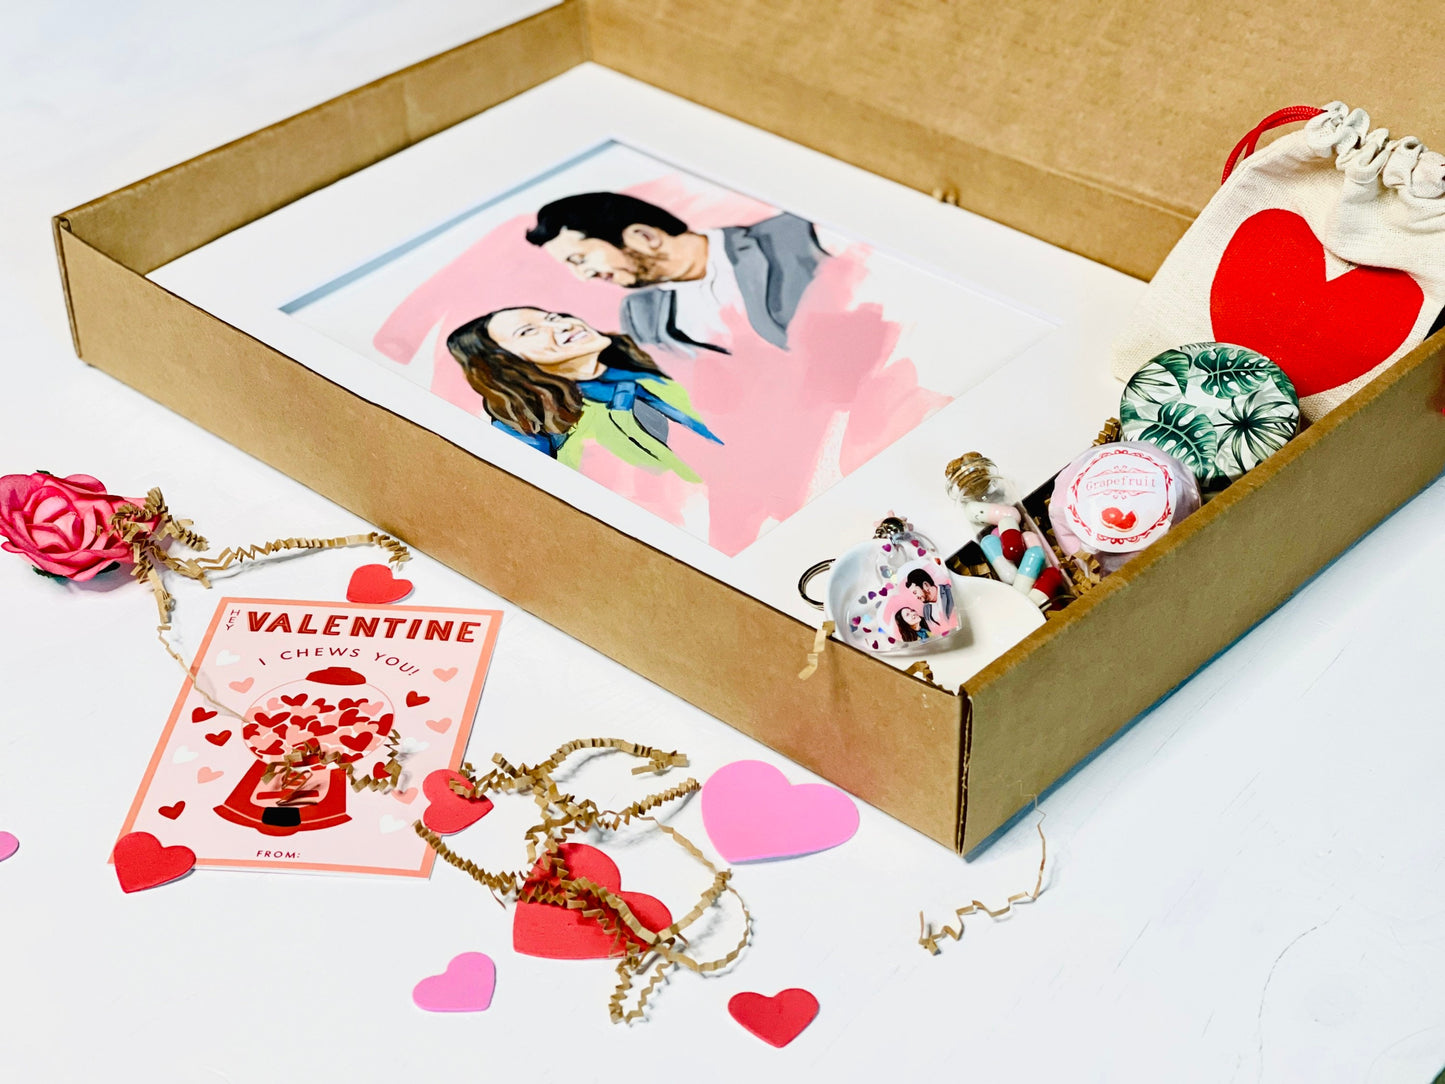 Valentines Custom Portrait painting Gift Box For Her Resin keychain distance bracelet love note bottle Romantic Best gift idea